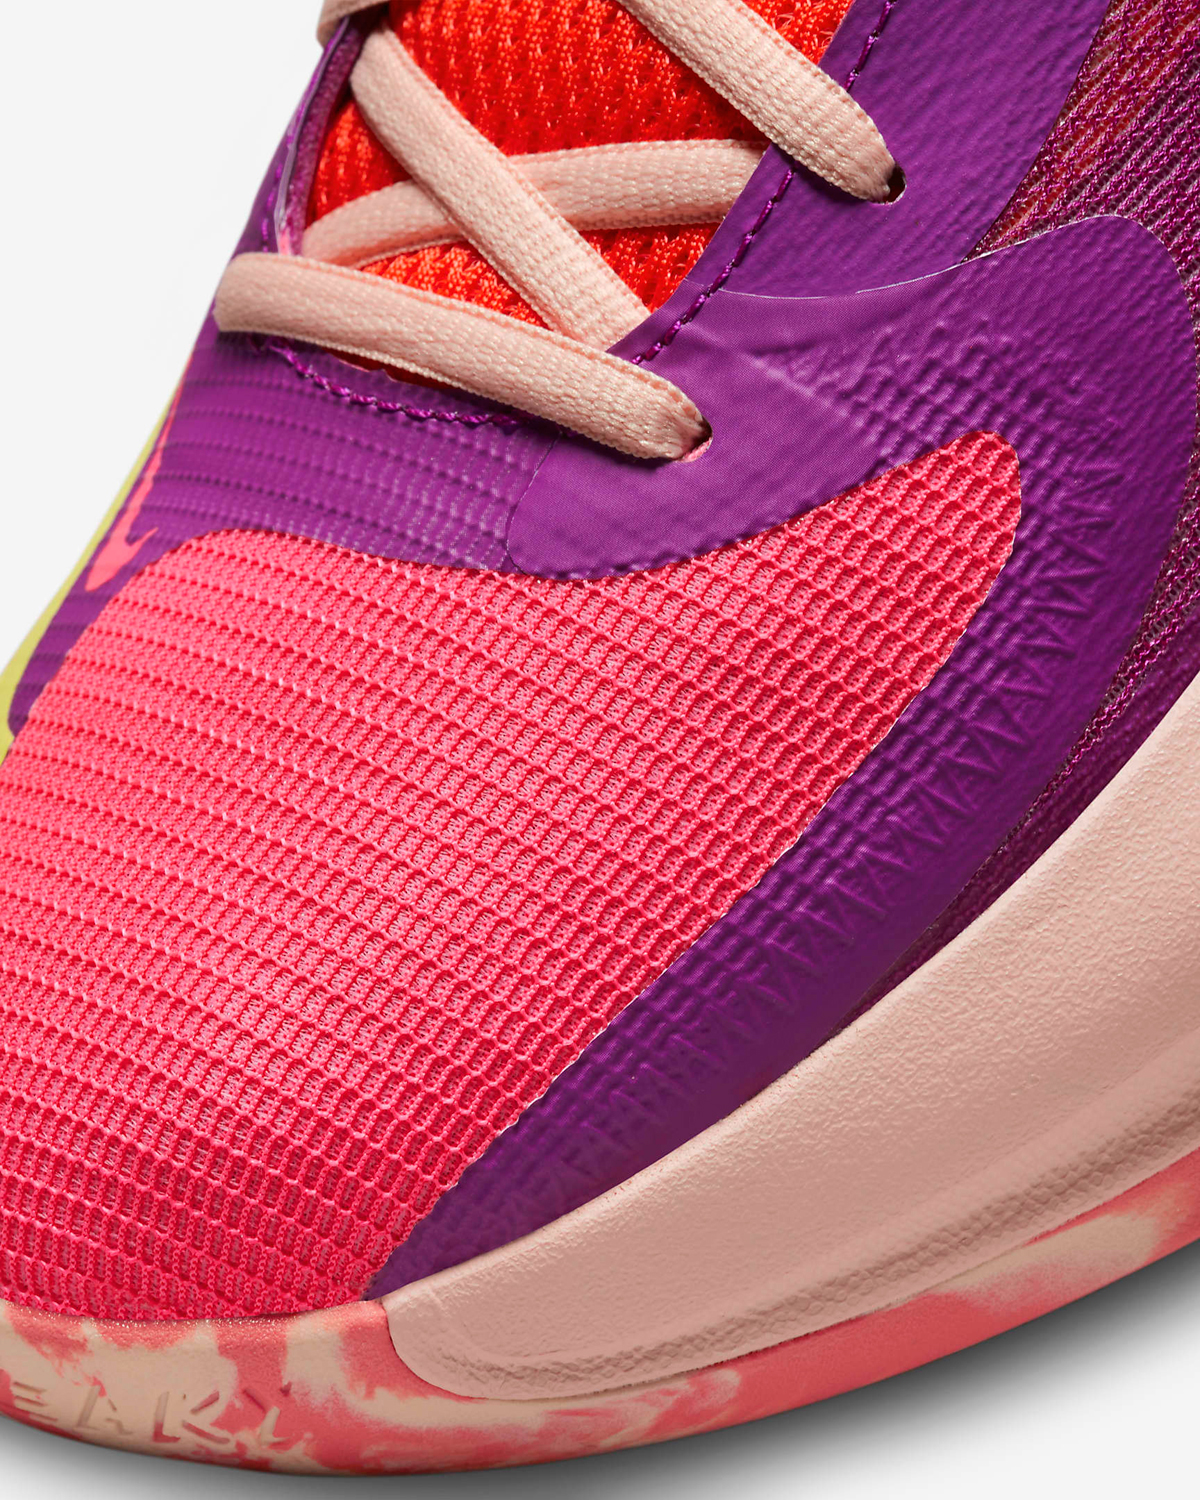 Nike-Zoom-Freak-4-Vivid-Purple-Laser-Blue-Hyper-Pink-Where-to-Buy-7